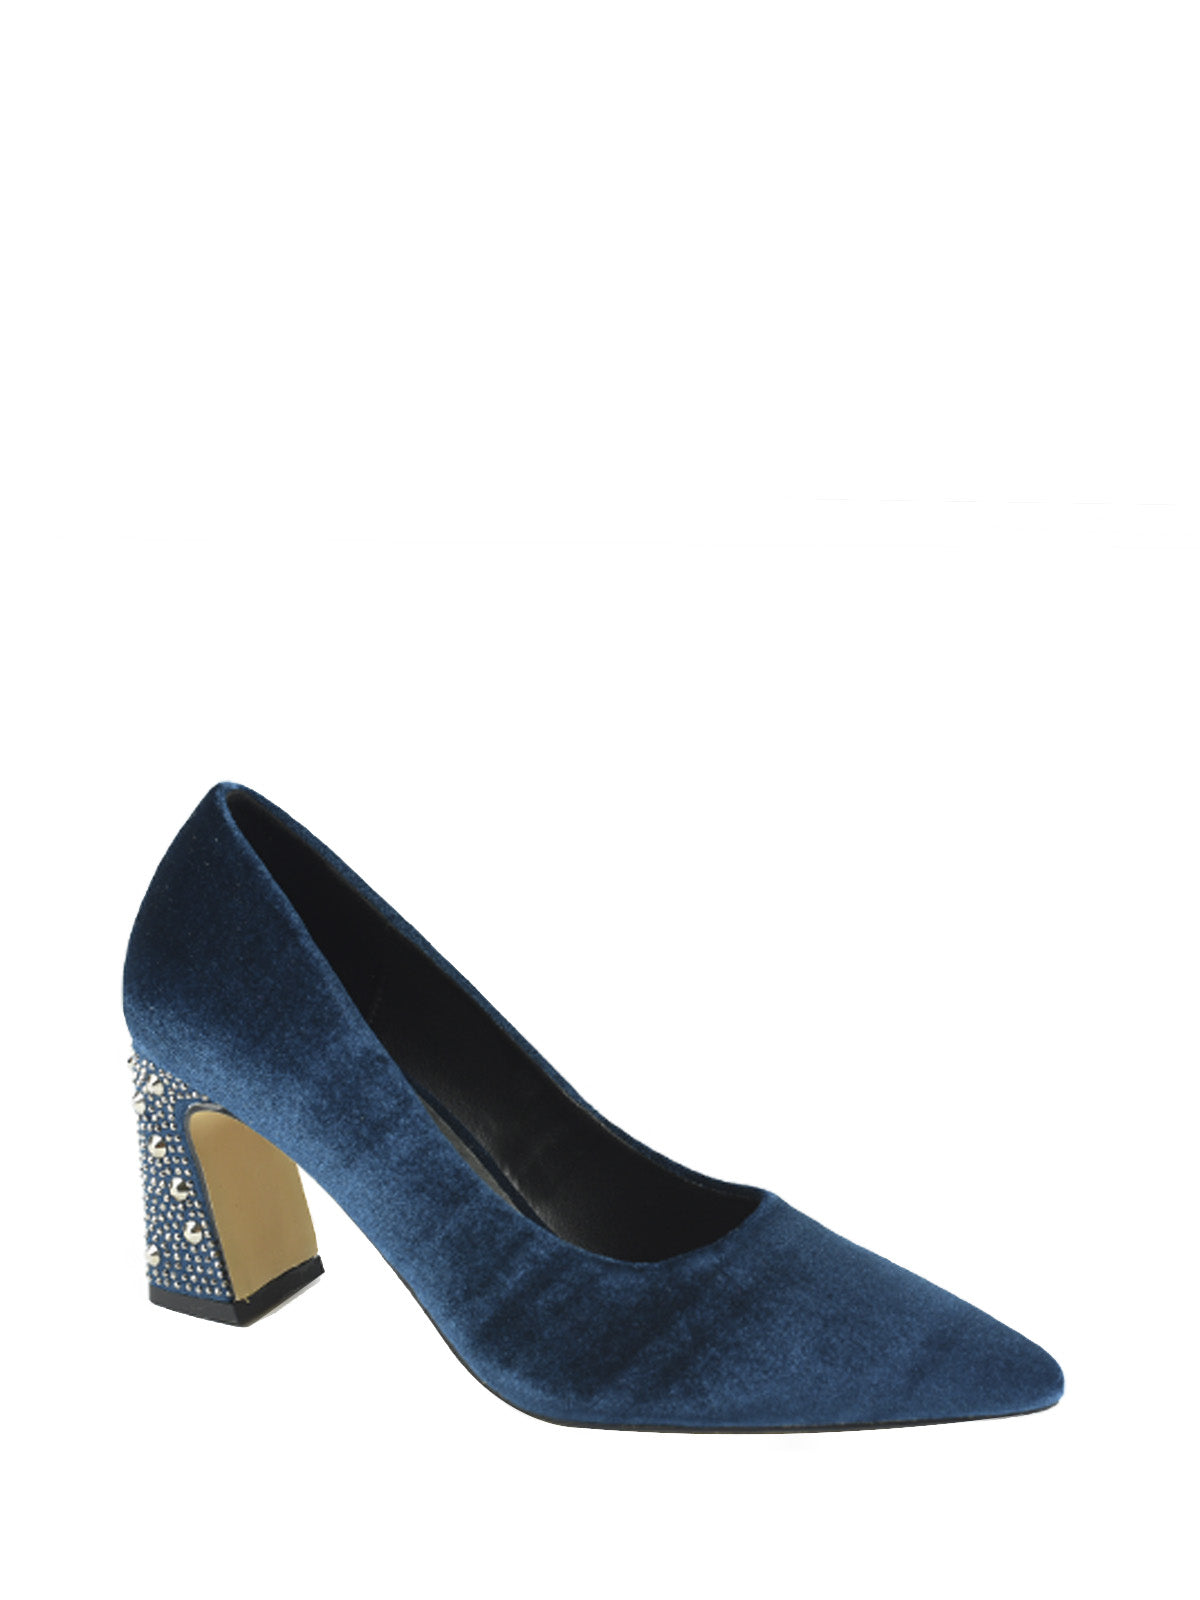 Zapato de salón azul terciopelo y tacón de pedredría